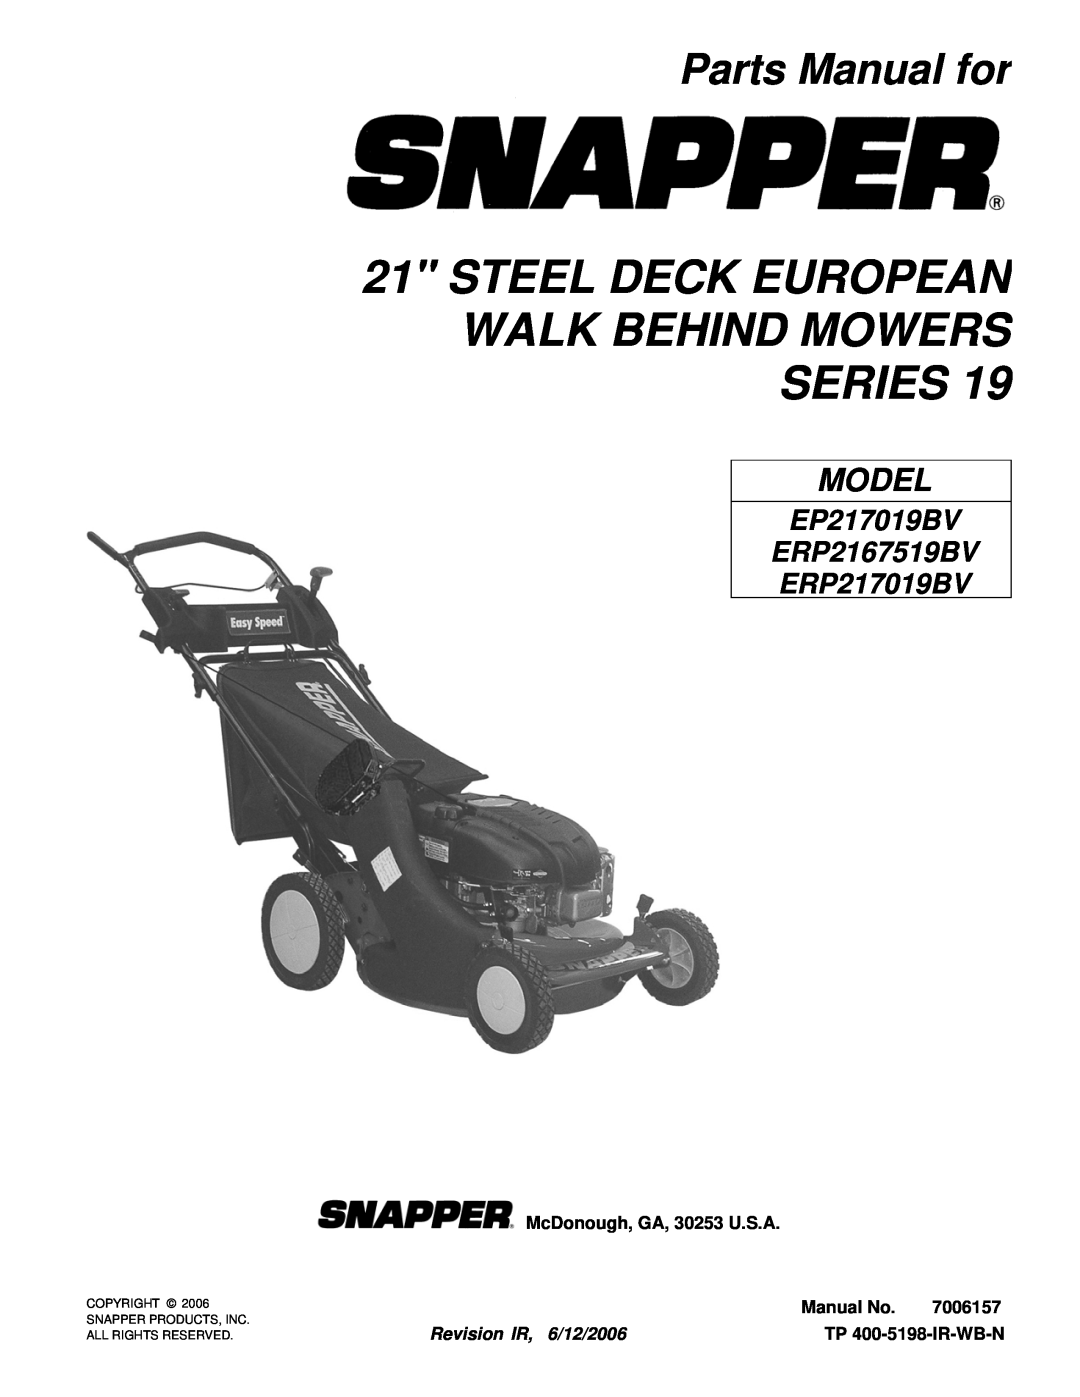 Snapper EP216751BV manual Steel Deck European Walk Behind Mowers Series, Parts Manual for, McDonough, GA, 30253 U.S.A 